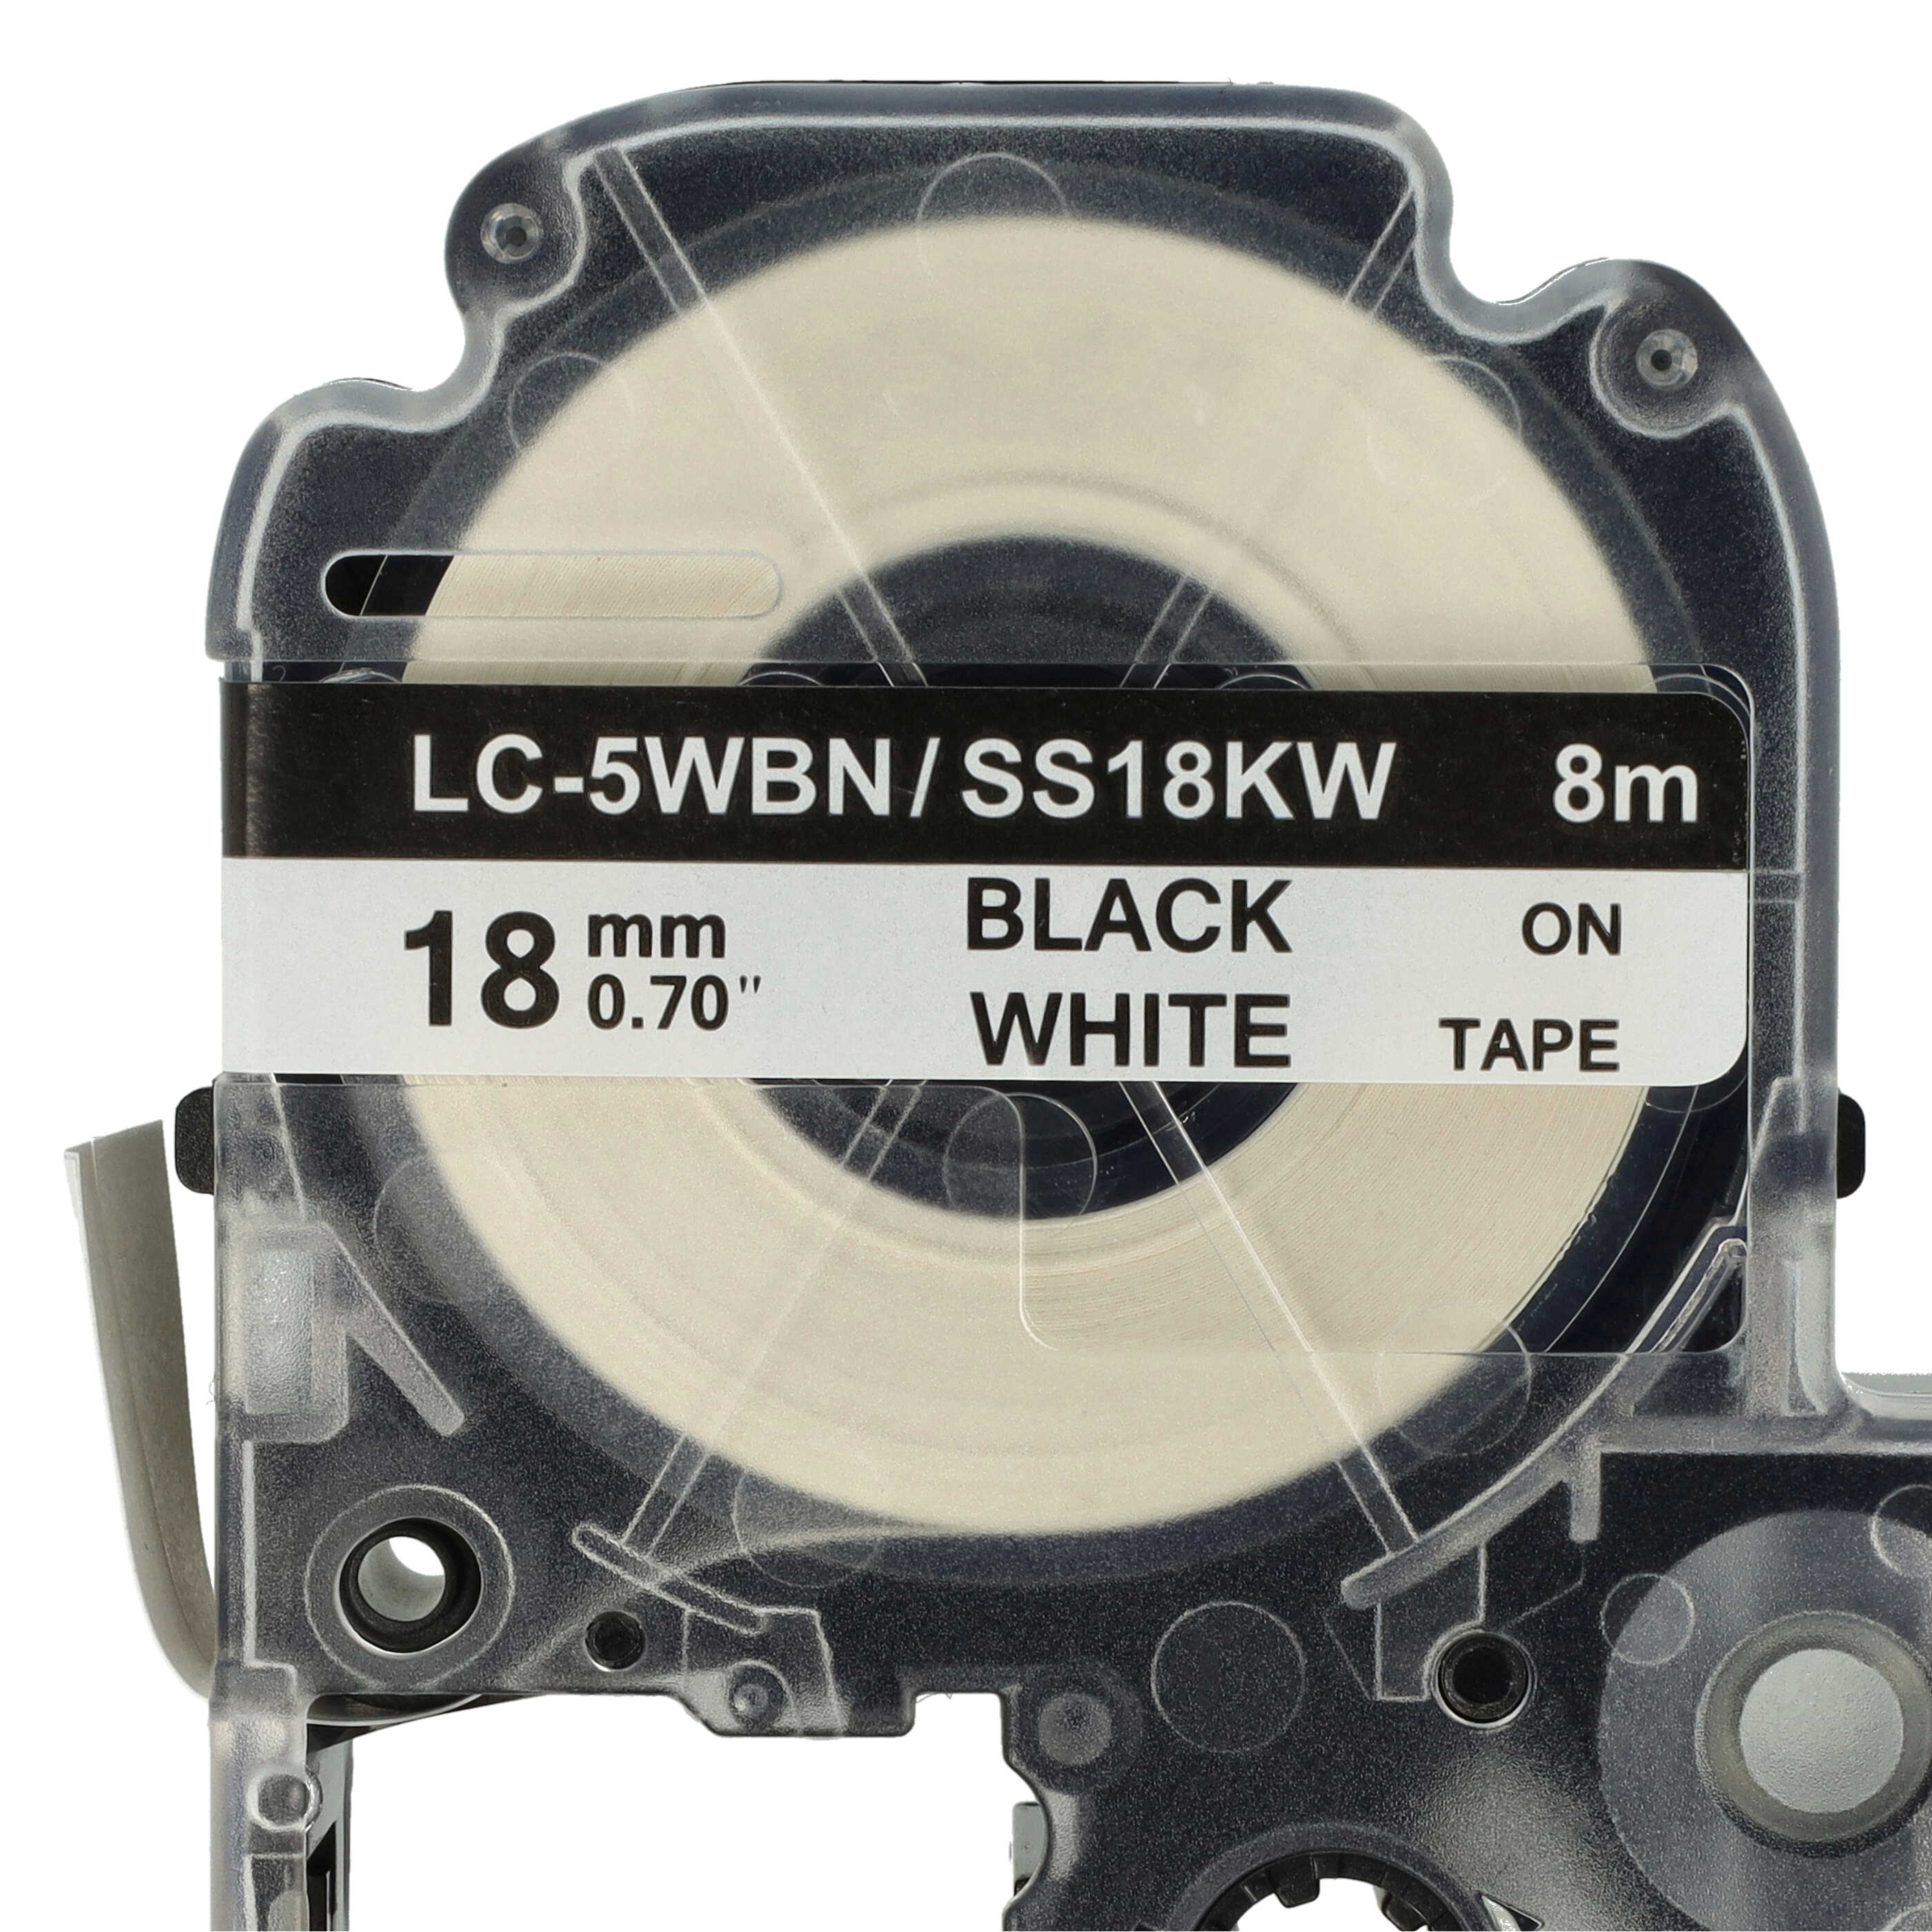 Casete cinta escritura reemplaza Epson LC-5WBN Negro su Blanco